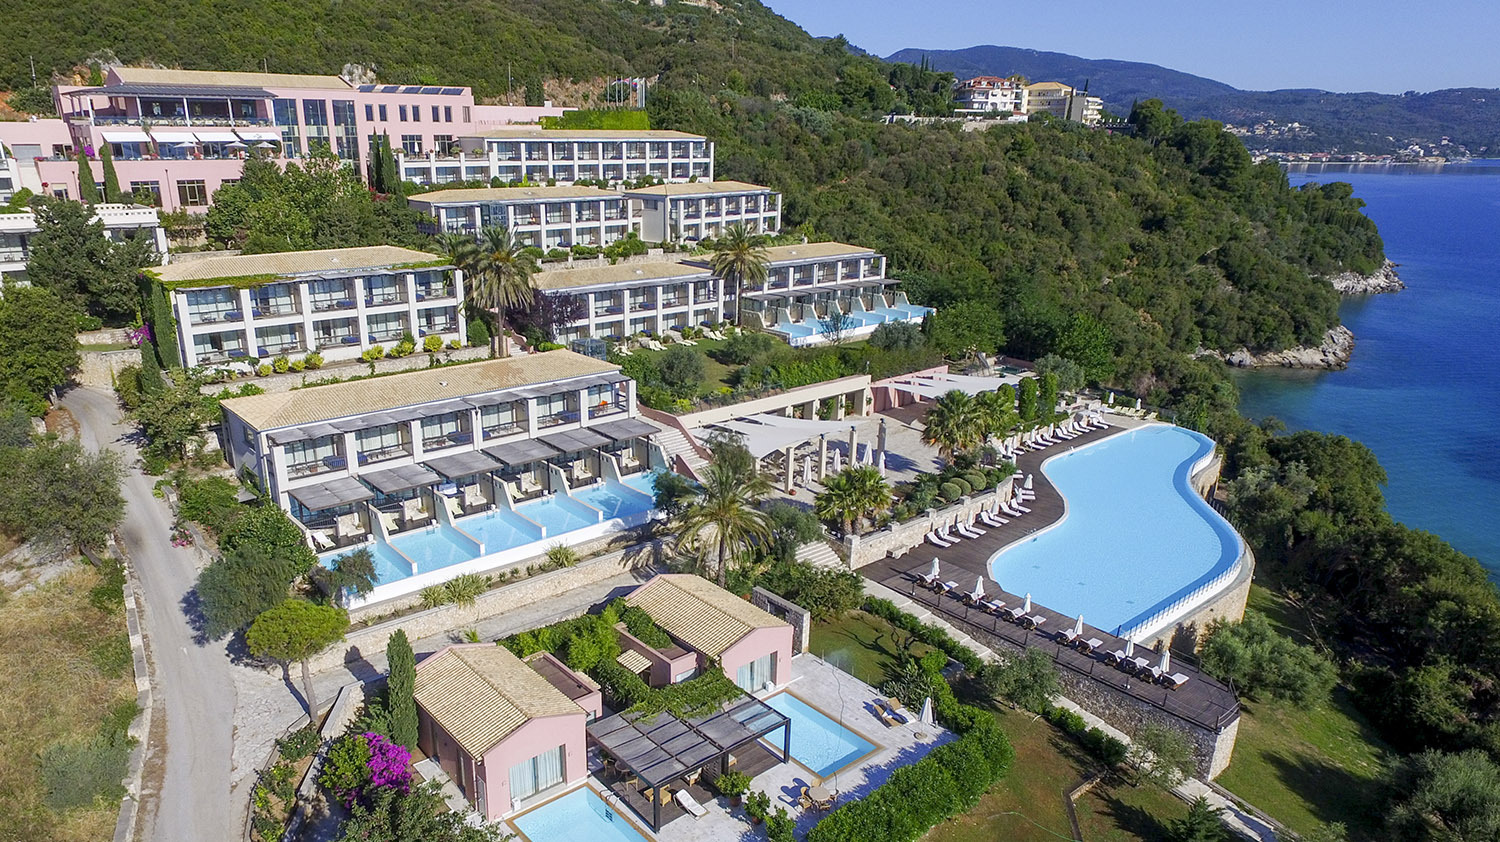 5* Ionian Blue Hotel Bungalows &amp; Spa Resort - Λευκάδα ✦ -48% ✦ 2 Ημέρες (1 Διανυκτέρευση) ✦ 2 άτομα + 1 παιδί έως 12 ετών ✦ 8 ✦ 01/10/2022 έως 26/10/2022 ✦ &lt;strong&gt; Για διαμονή 3 διανυκτερεύσεων ΔΩΡΟ 1 massage!&lt;/strong&gt;